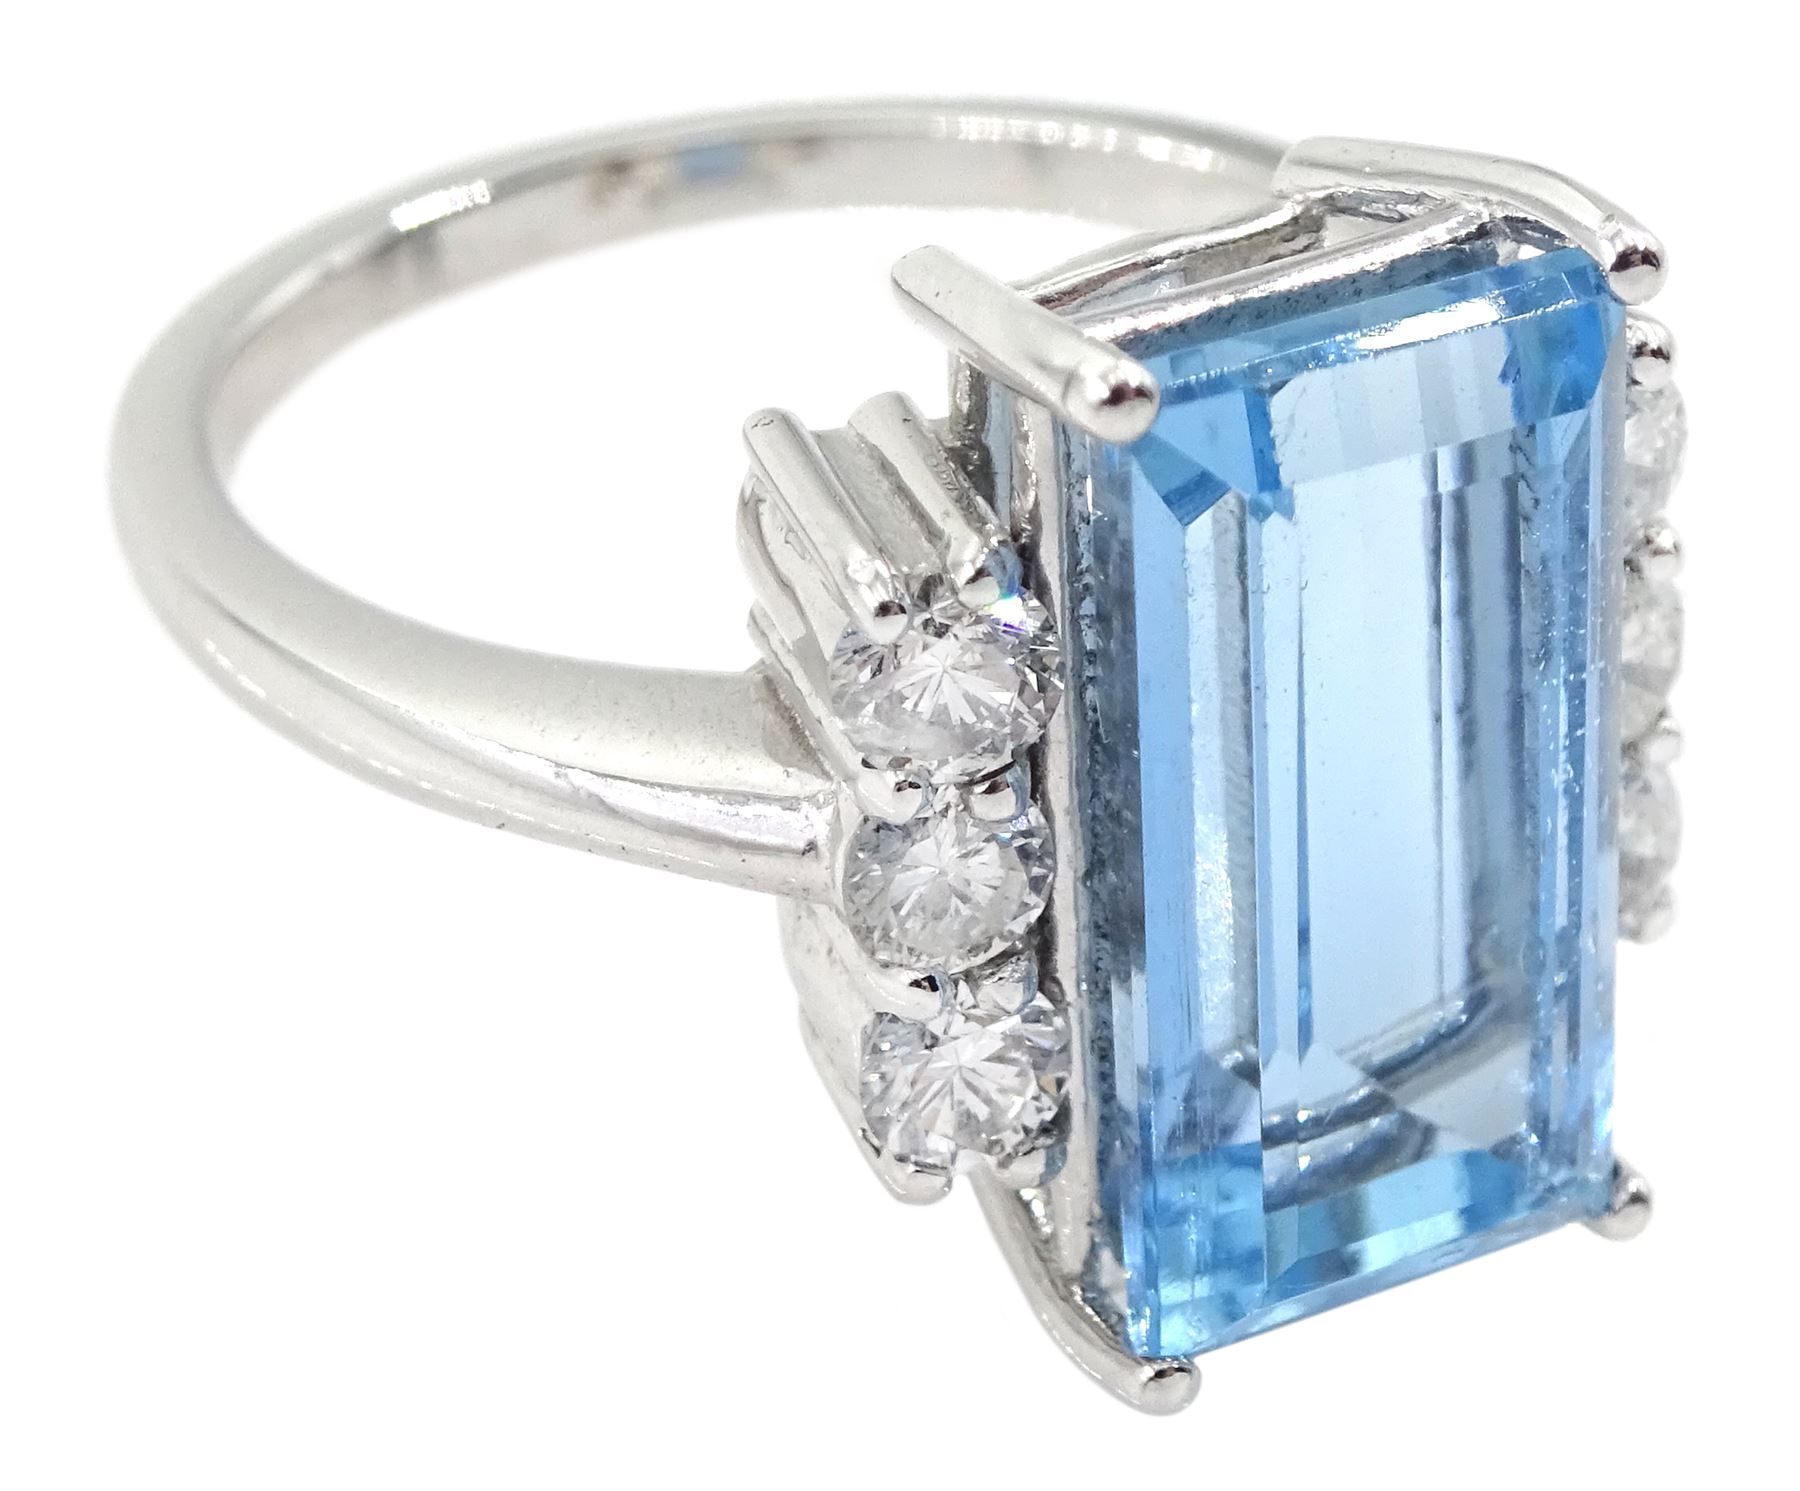 18ct white gold baguette cut aquamarine and six stone round brilliant cut diamond ring - Image 3 of 4